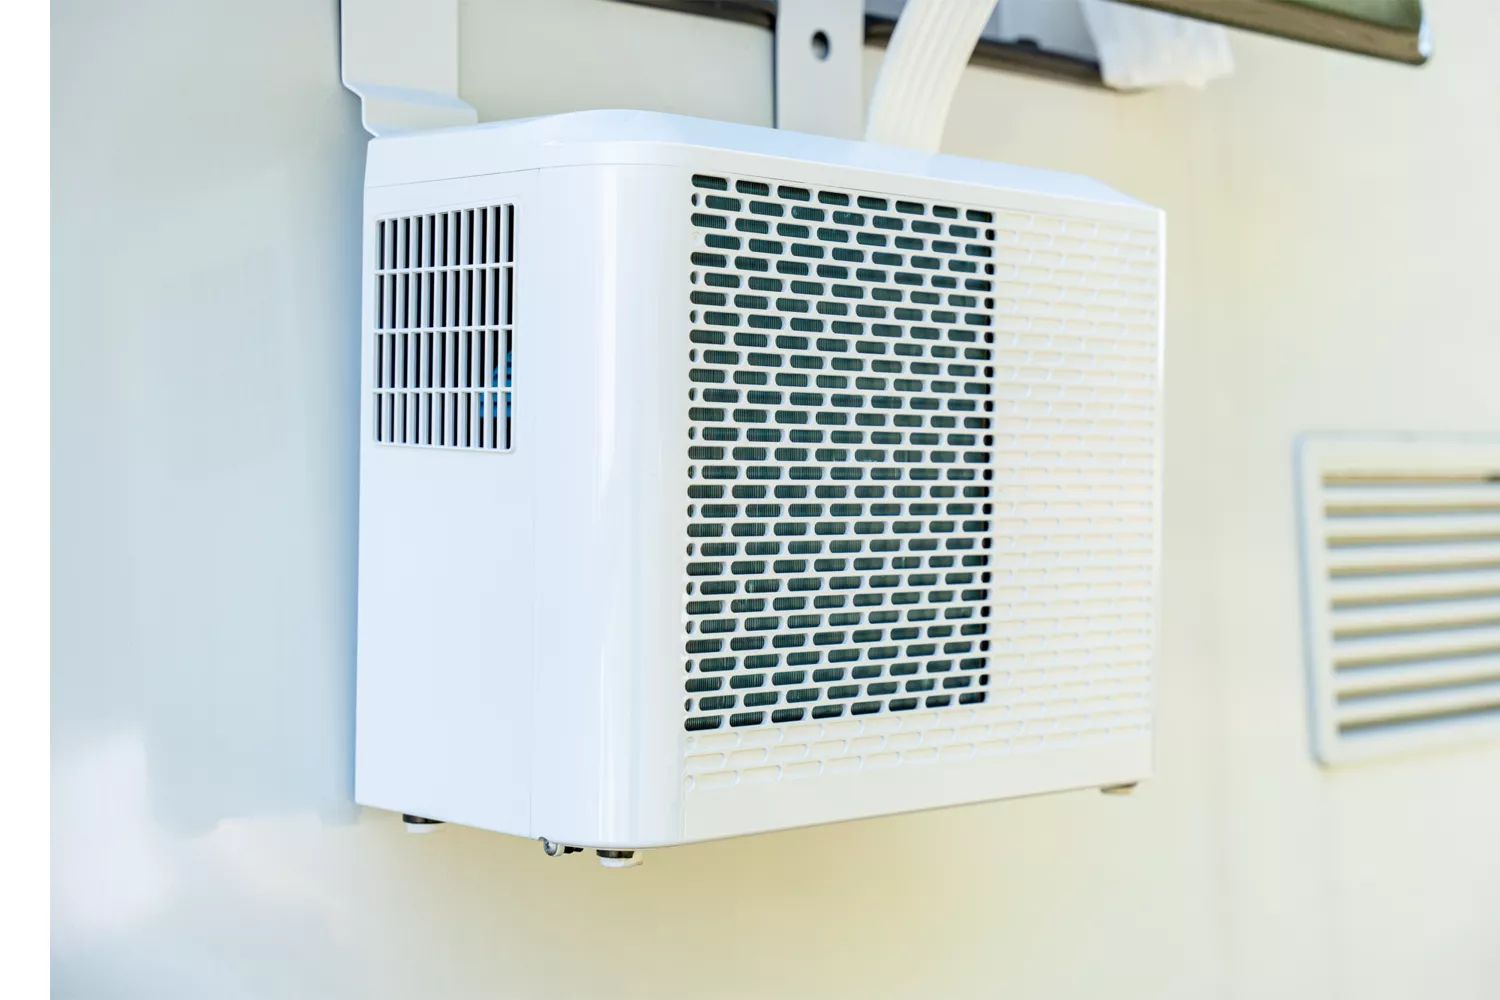 Leise Kühlung dank Split-Klimaanlagen - Technikratgeber - Hilfe & Beratung  - Berger Blog